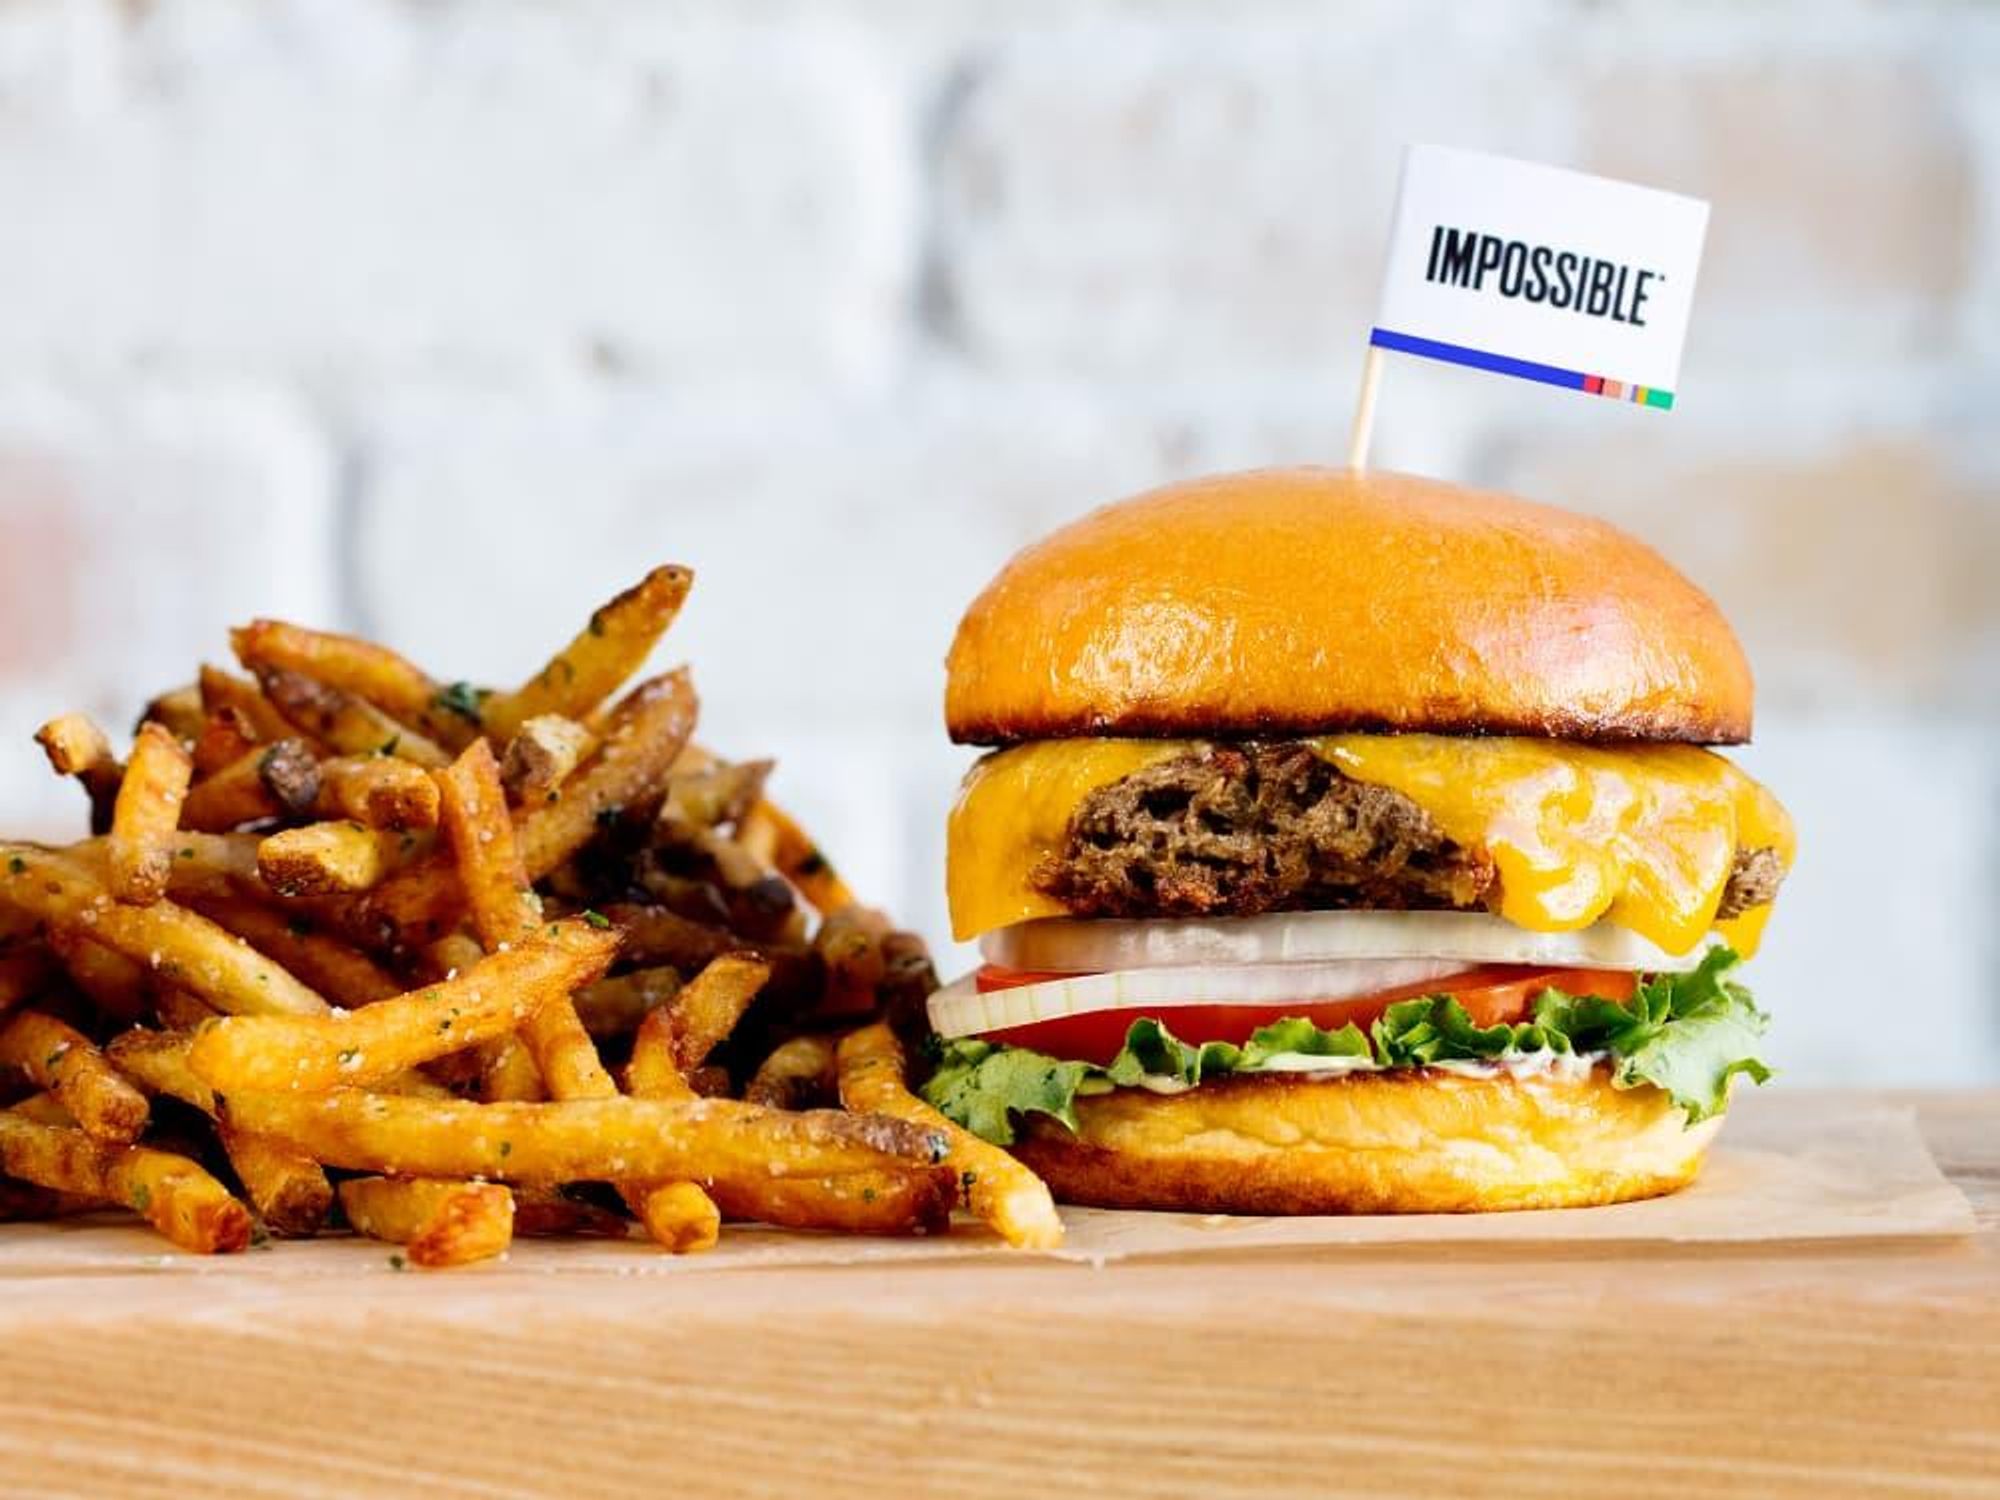 Hopdoddy Burger Bar Impossible Burger